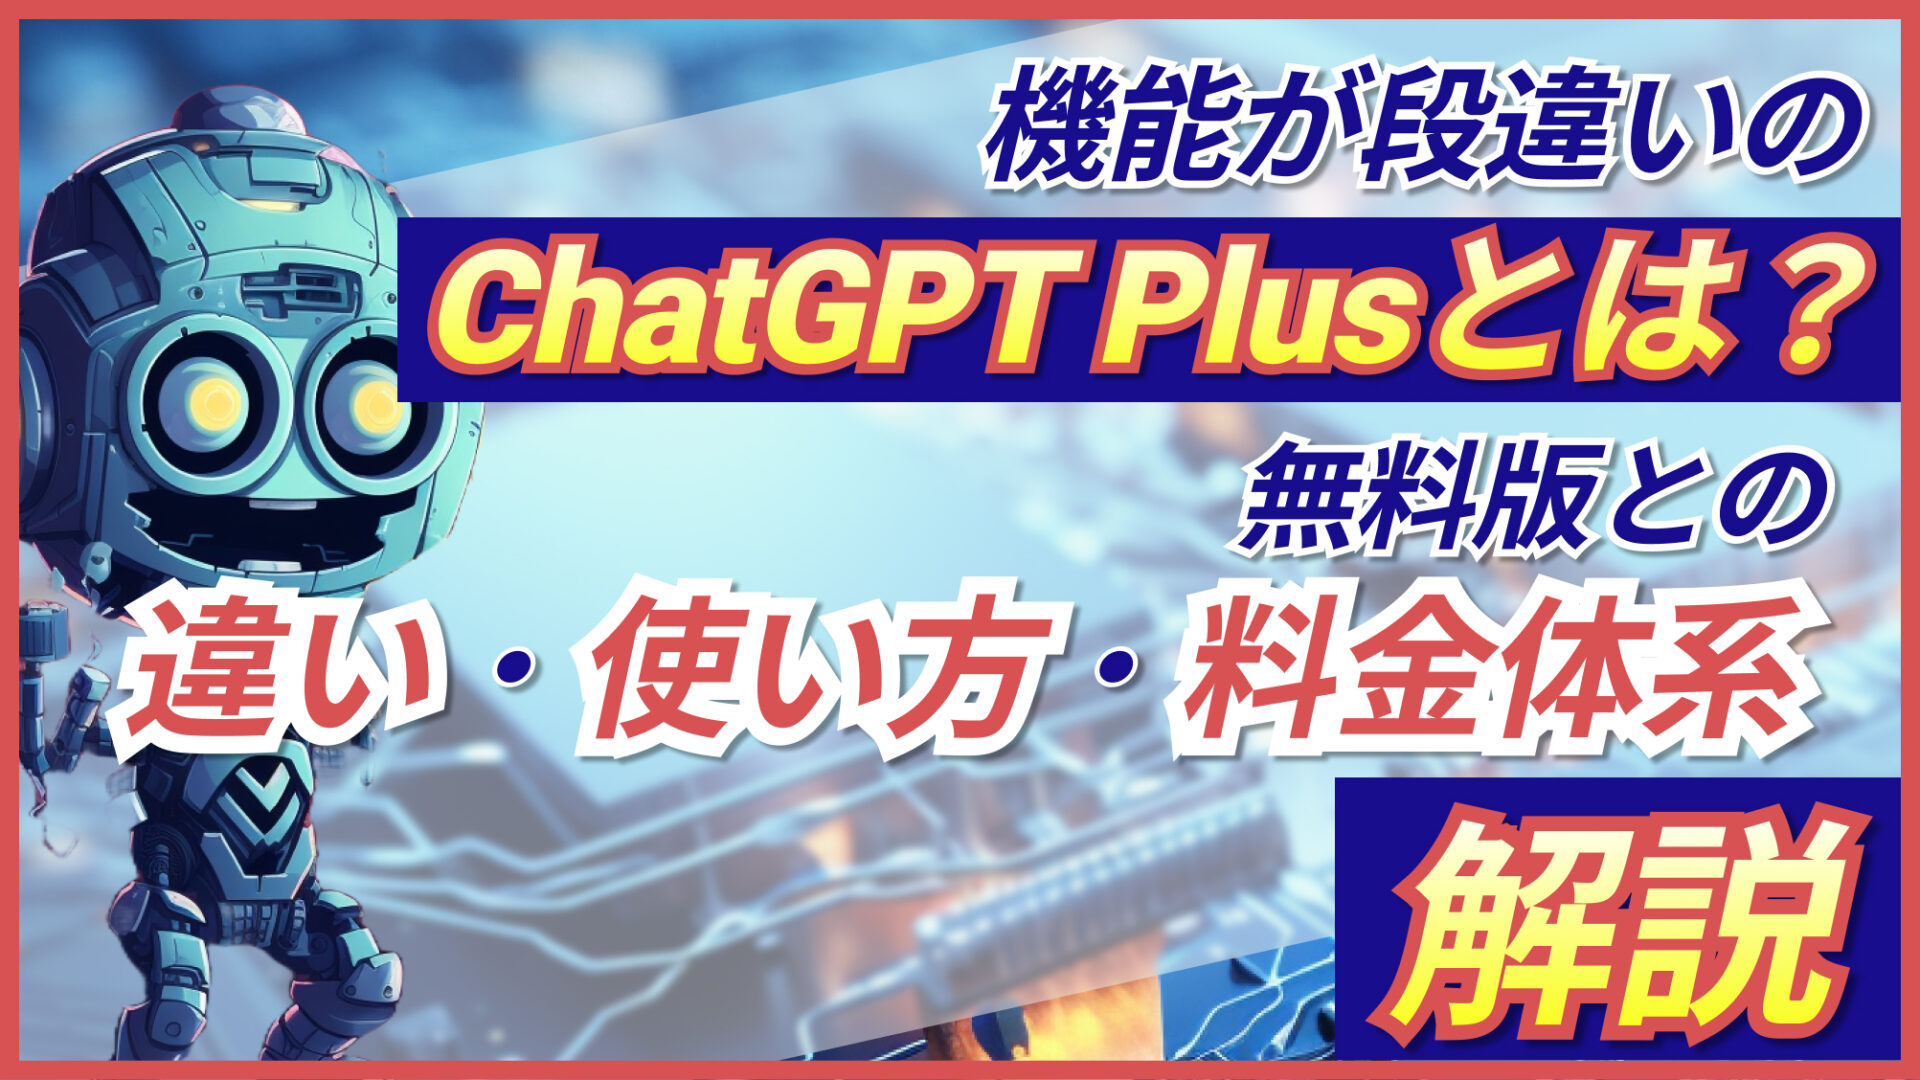 ChatGPT-Plus 無料版 違い 使い方 料金 解説